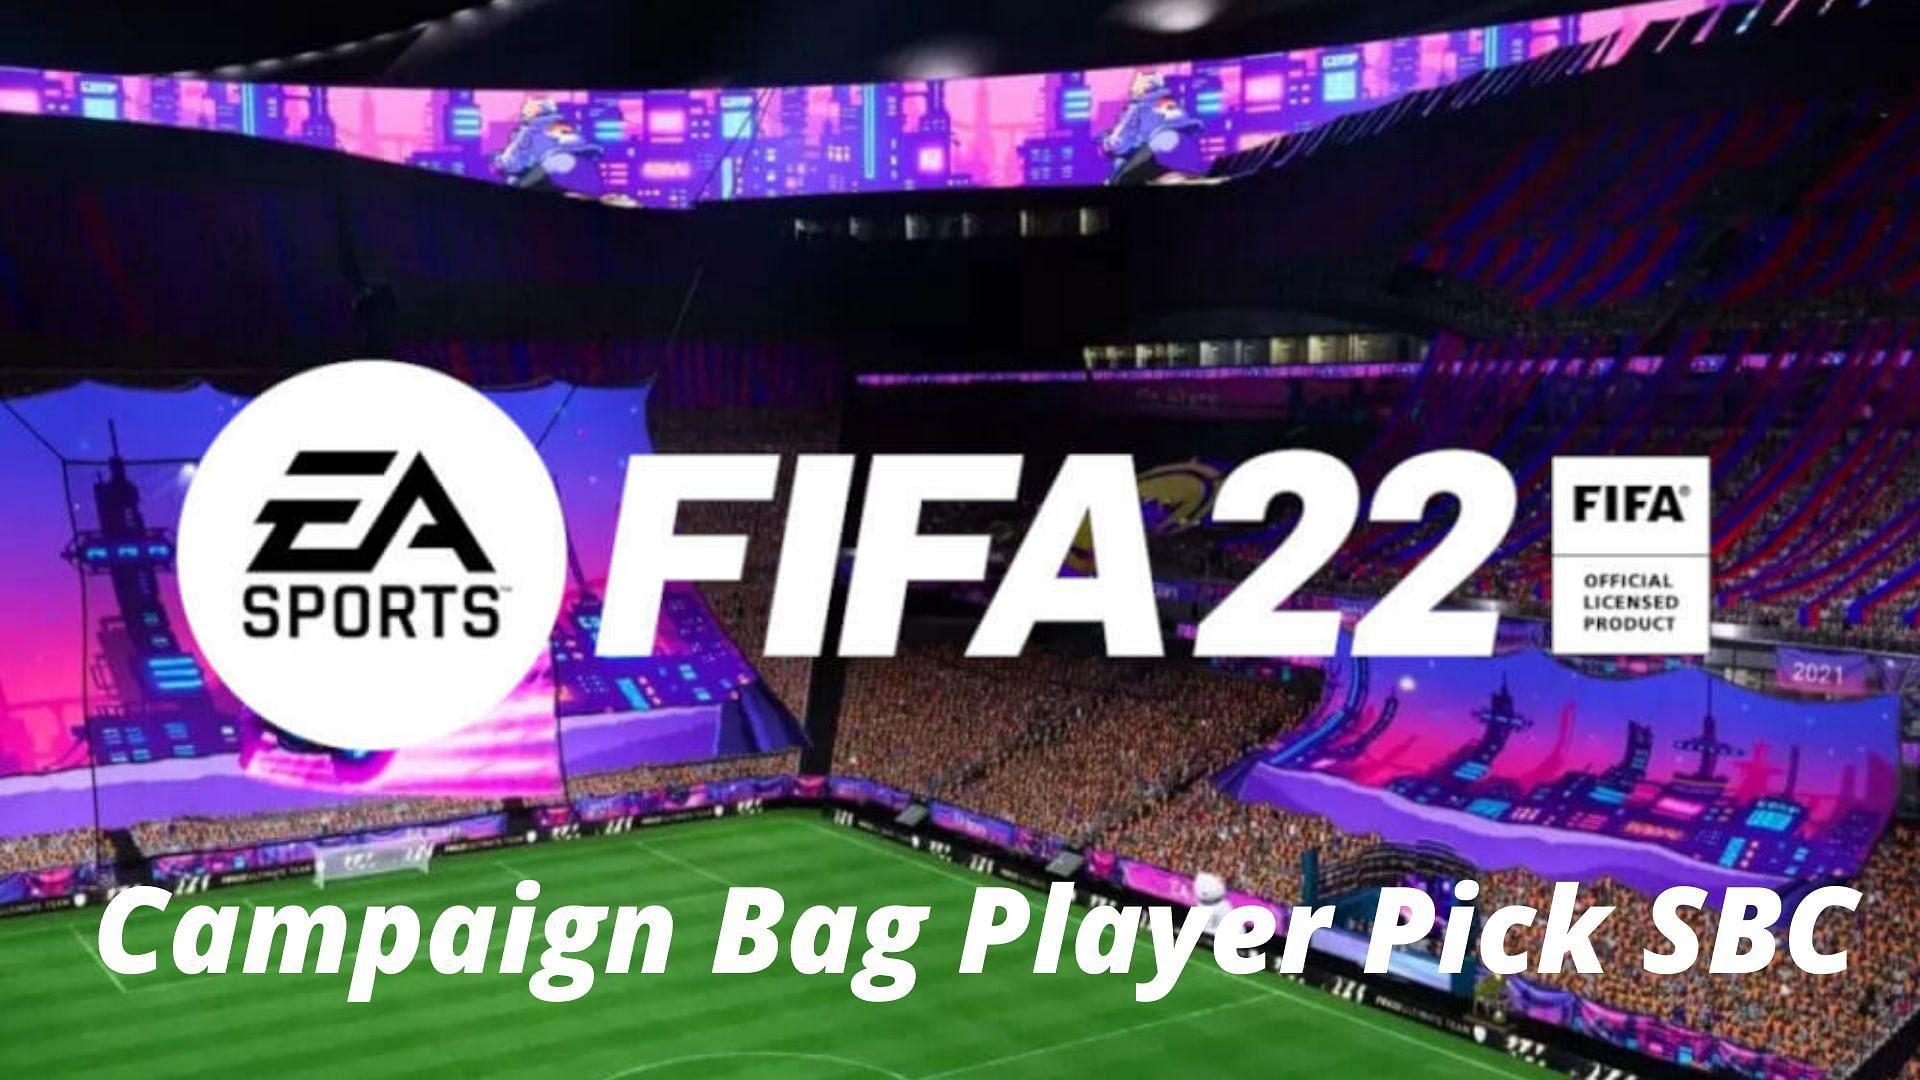 Campaign Bag Player Pick SBC is live in FIFA 22 Ultimate Team (Image via Sportskeeda)